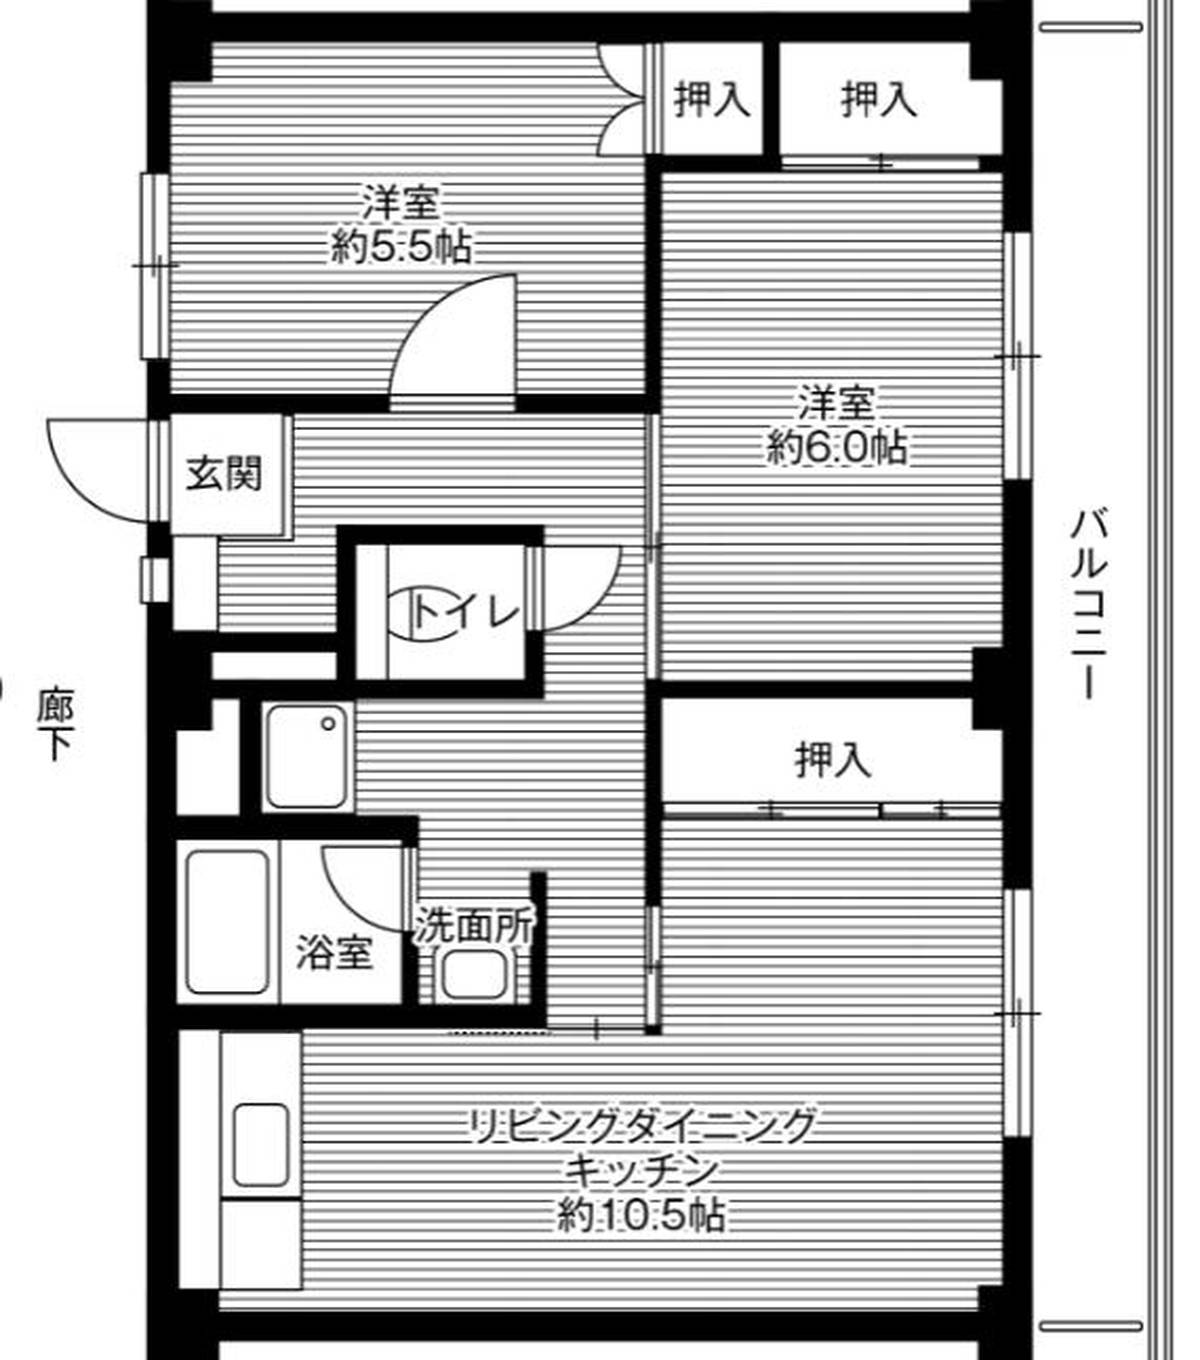 2LDK floorplan of Village House Kousai in Chuo-ku